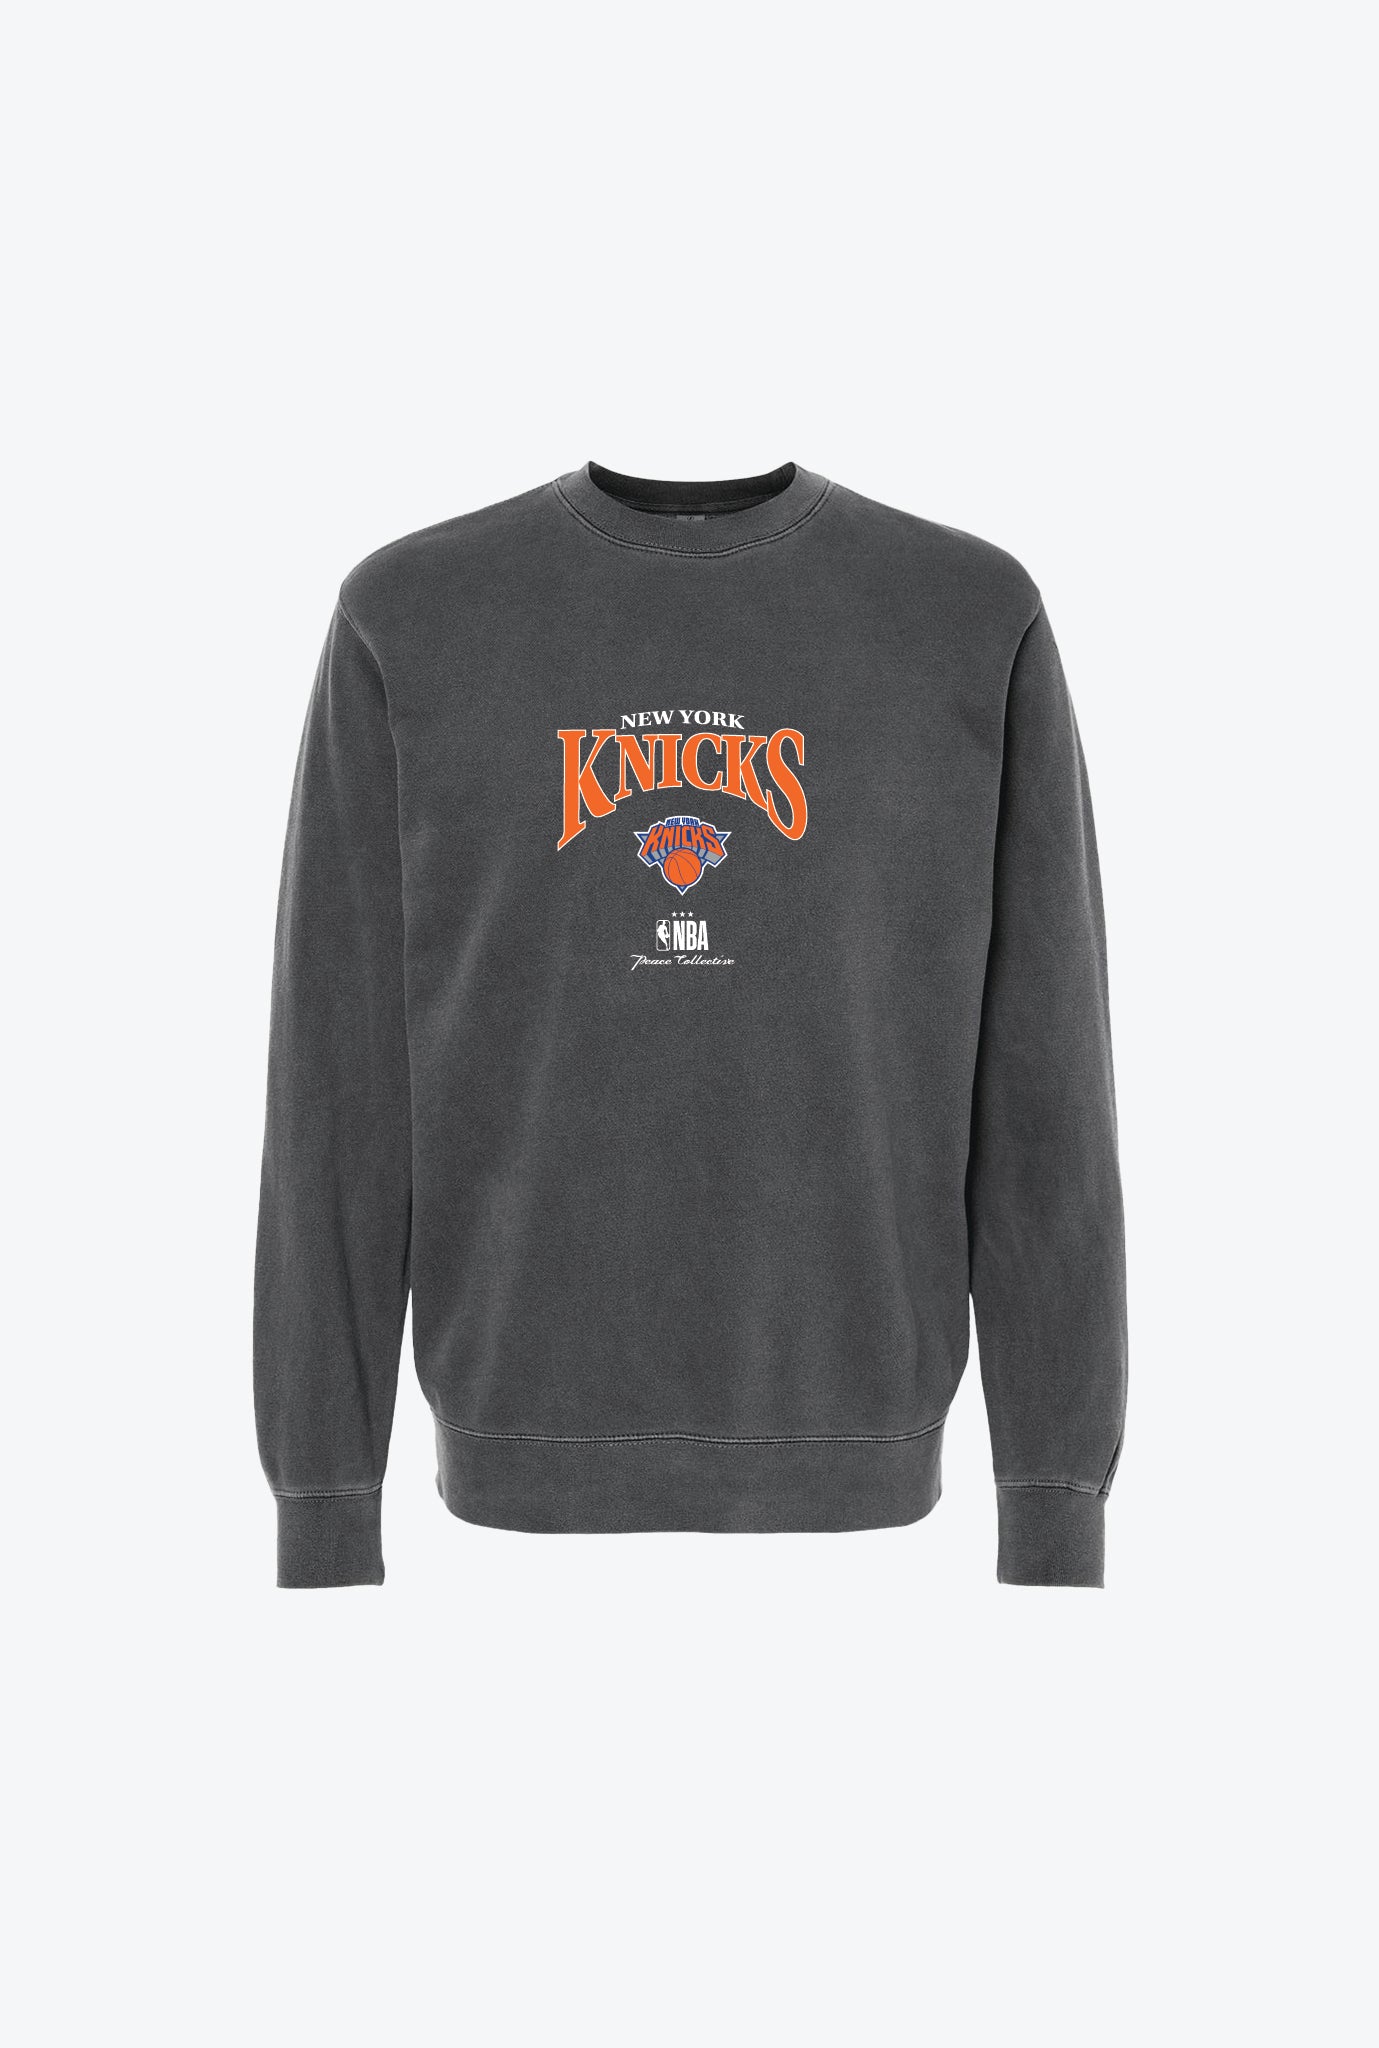 New York Knicks Pigment Dye Crewneck - Black